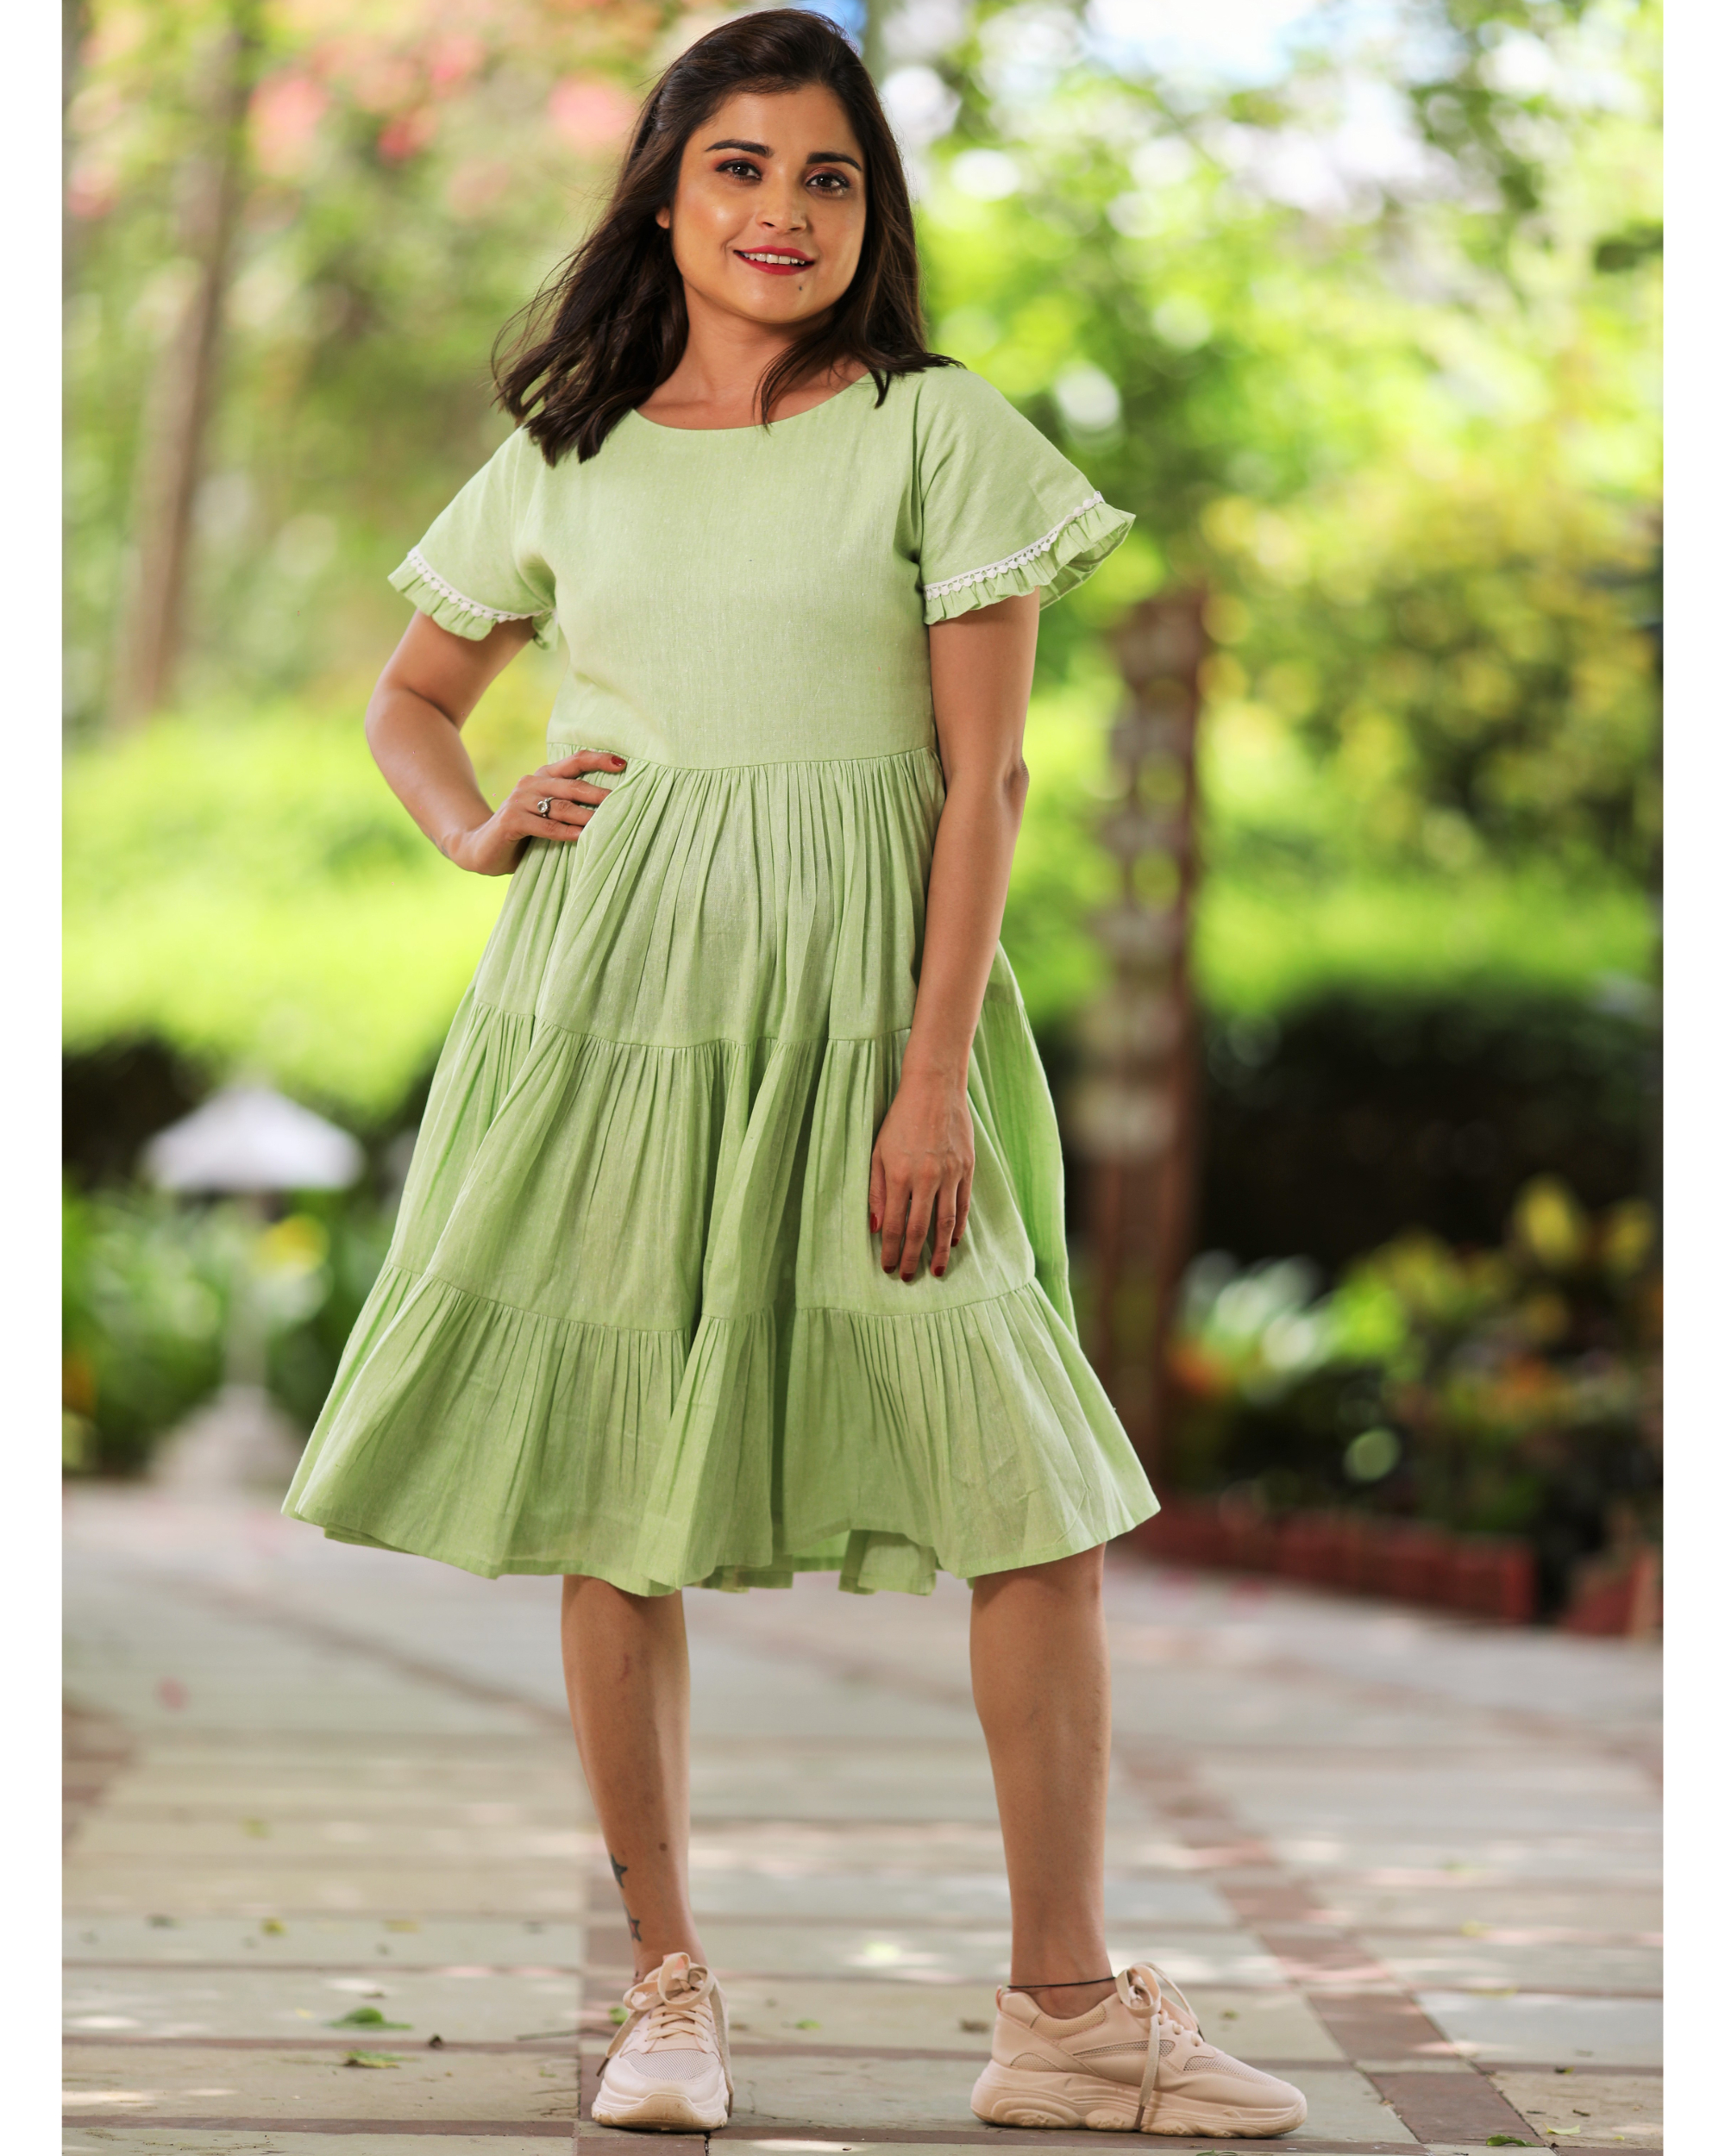 Pista Green Colour Dress Desings||Pista Green Dress Collection||Pista Green  Colour Combination Ideas - YouTube